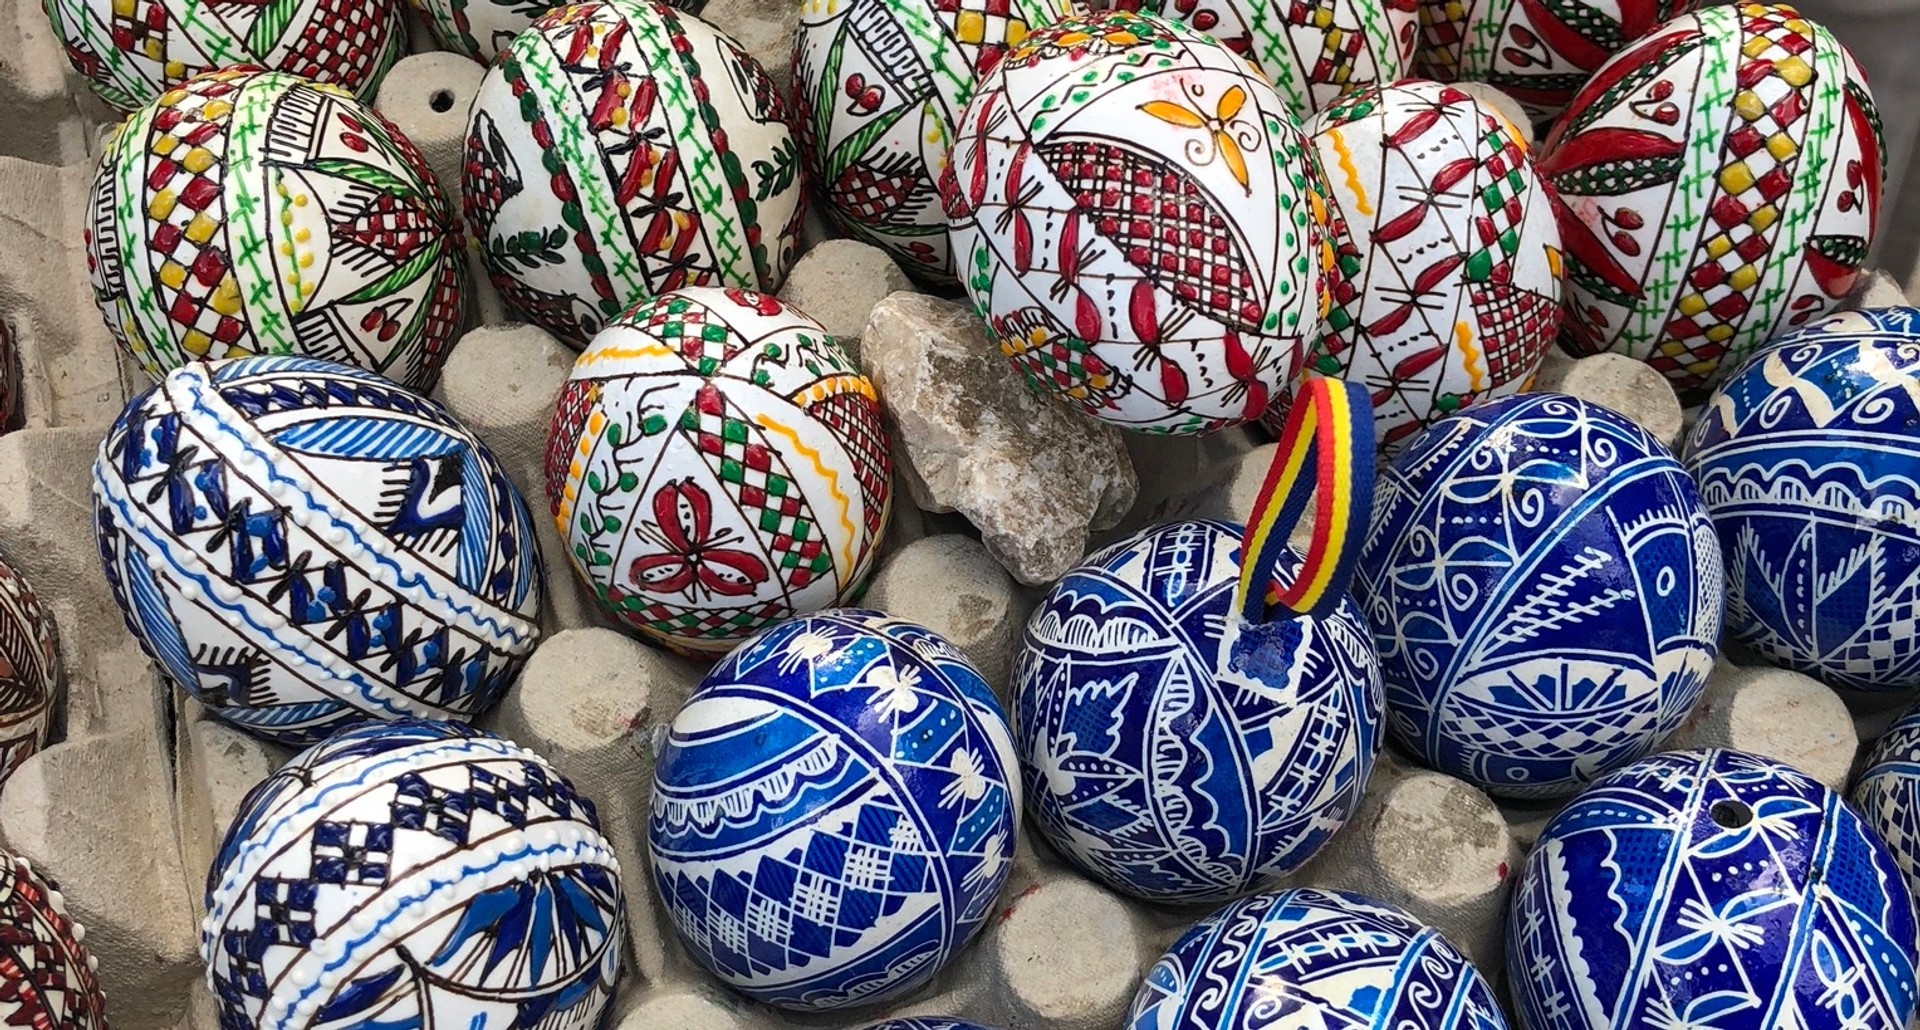 Decorative Romanian eggs